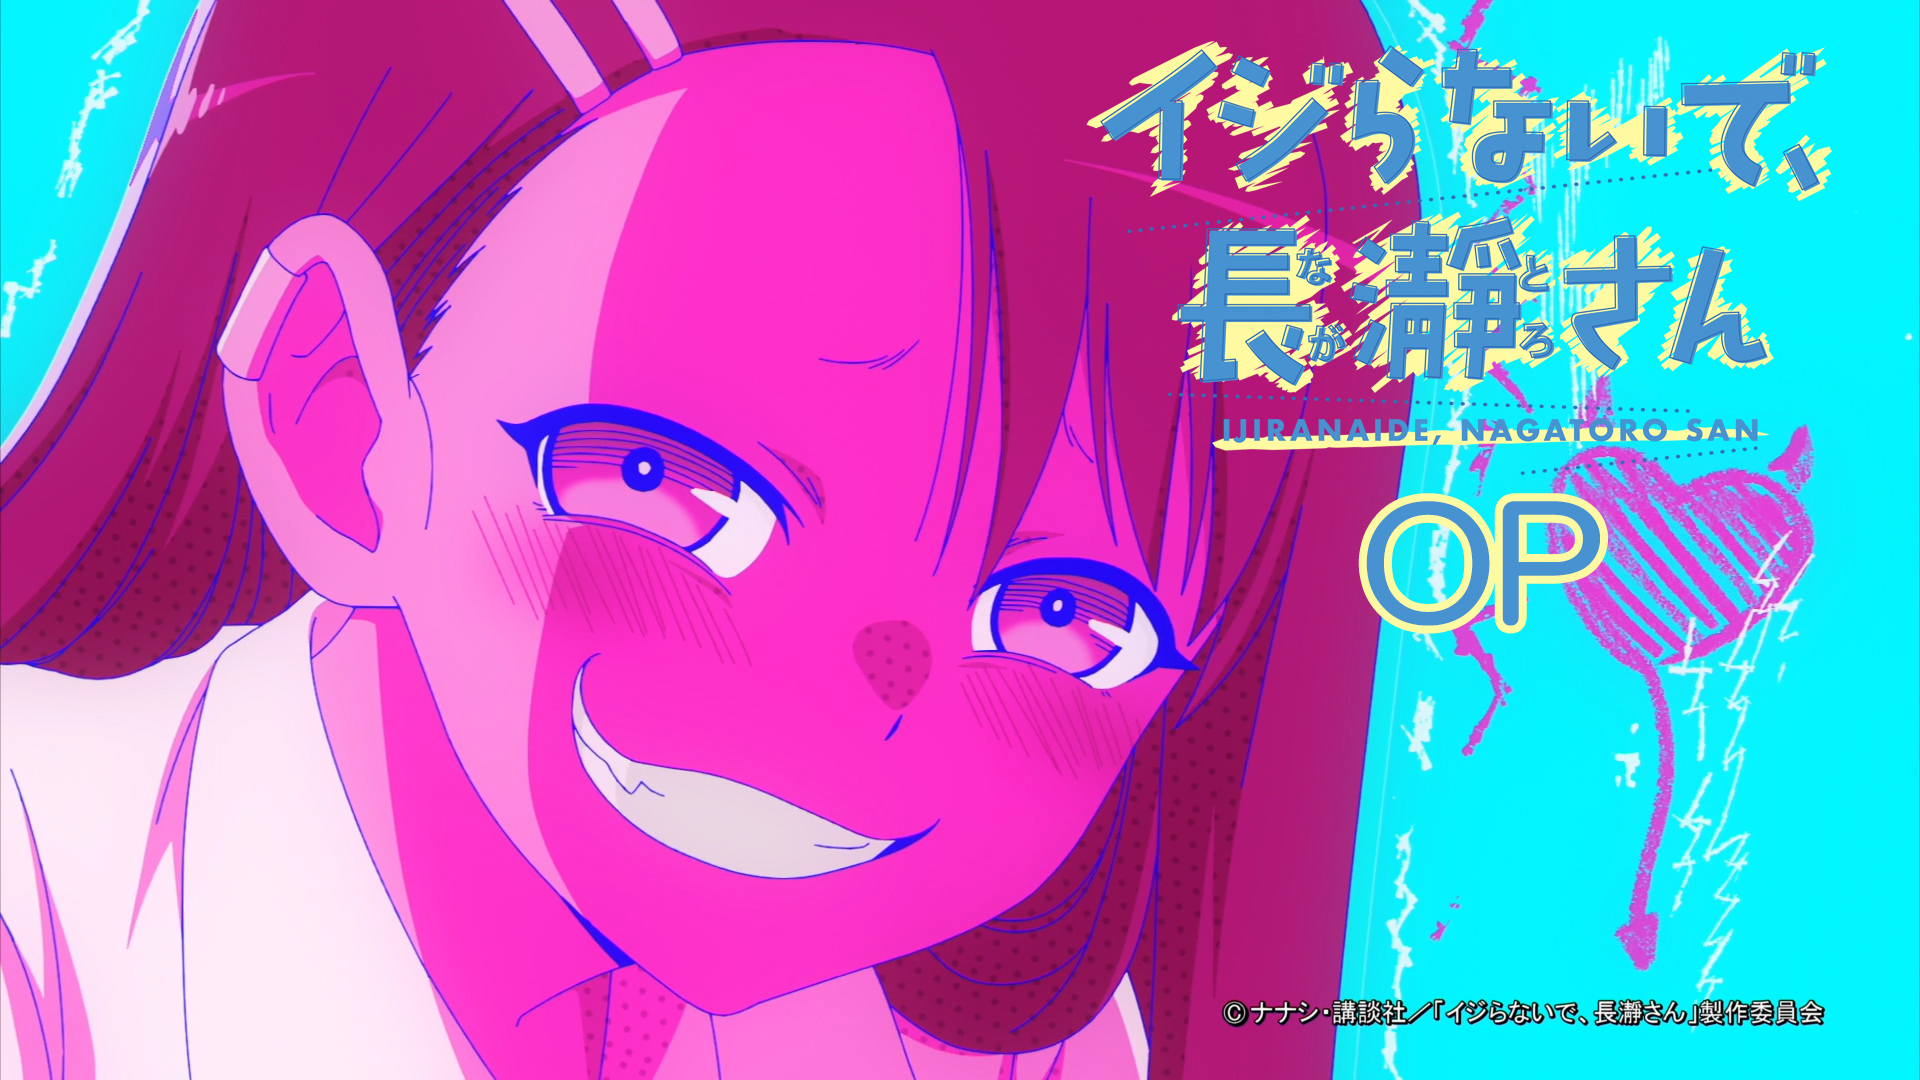 Yosshii Ijiranaide Nagatorosan Mobile Wallpaper by Kanchiyo 3701192   Zerochan Anime Image Board Mobile